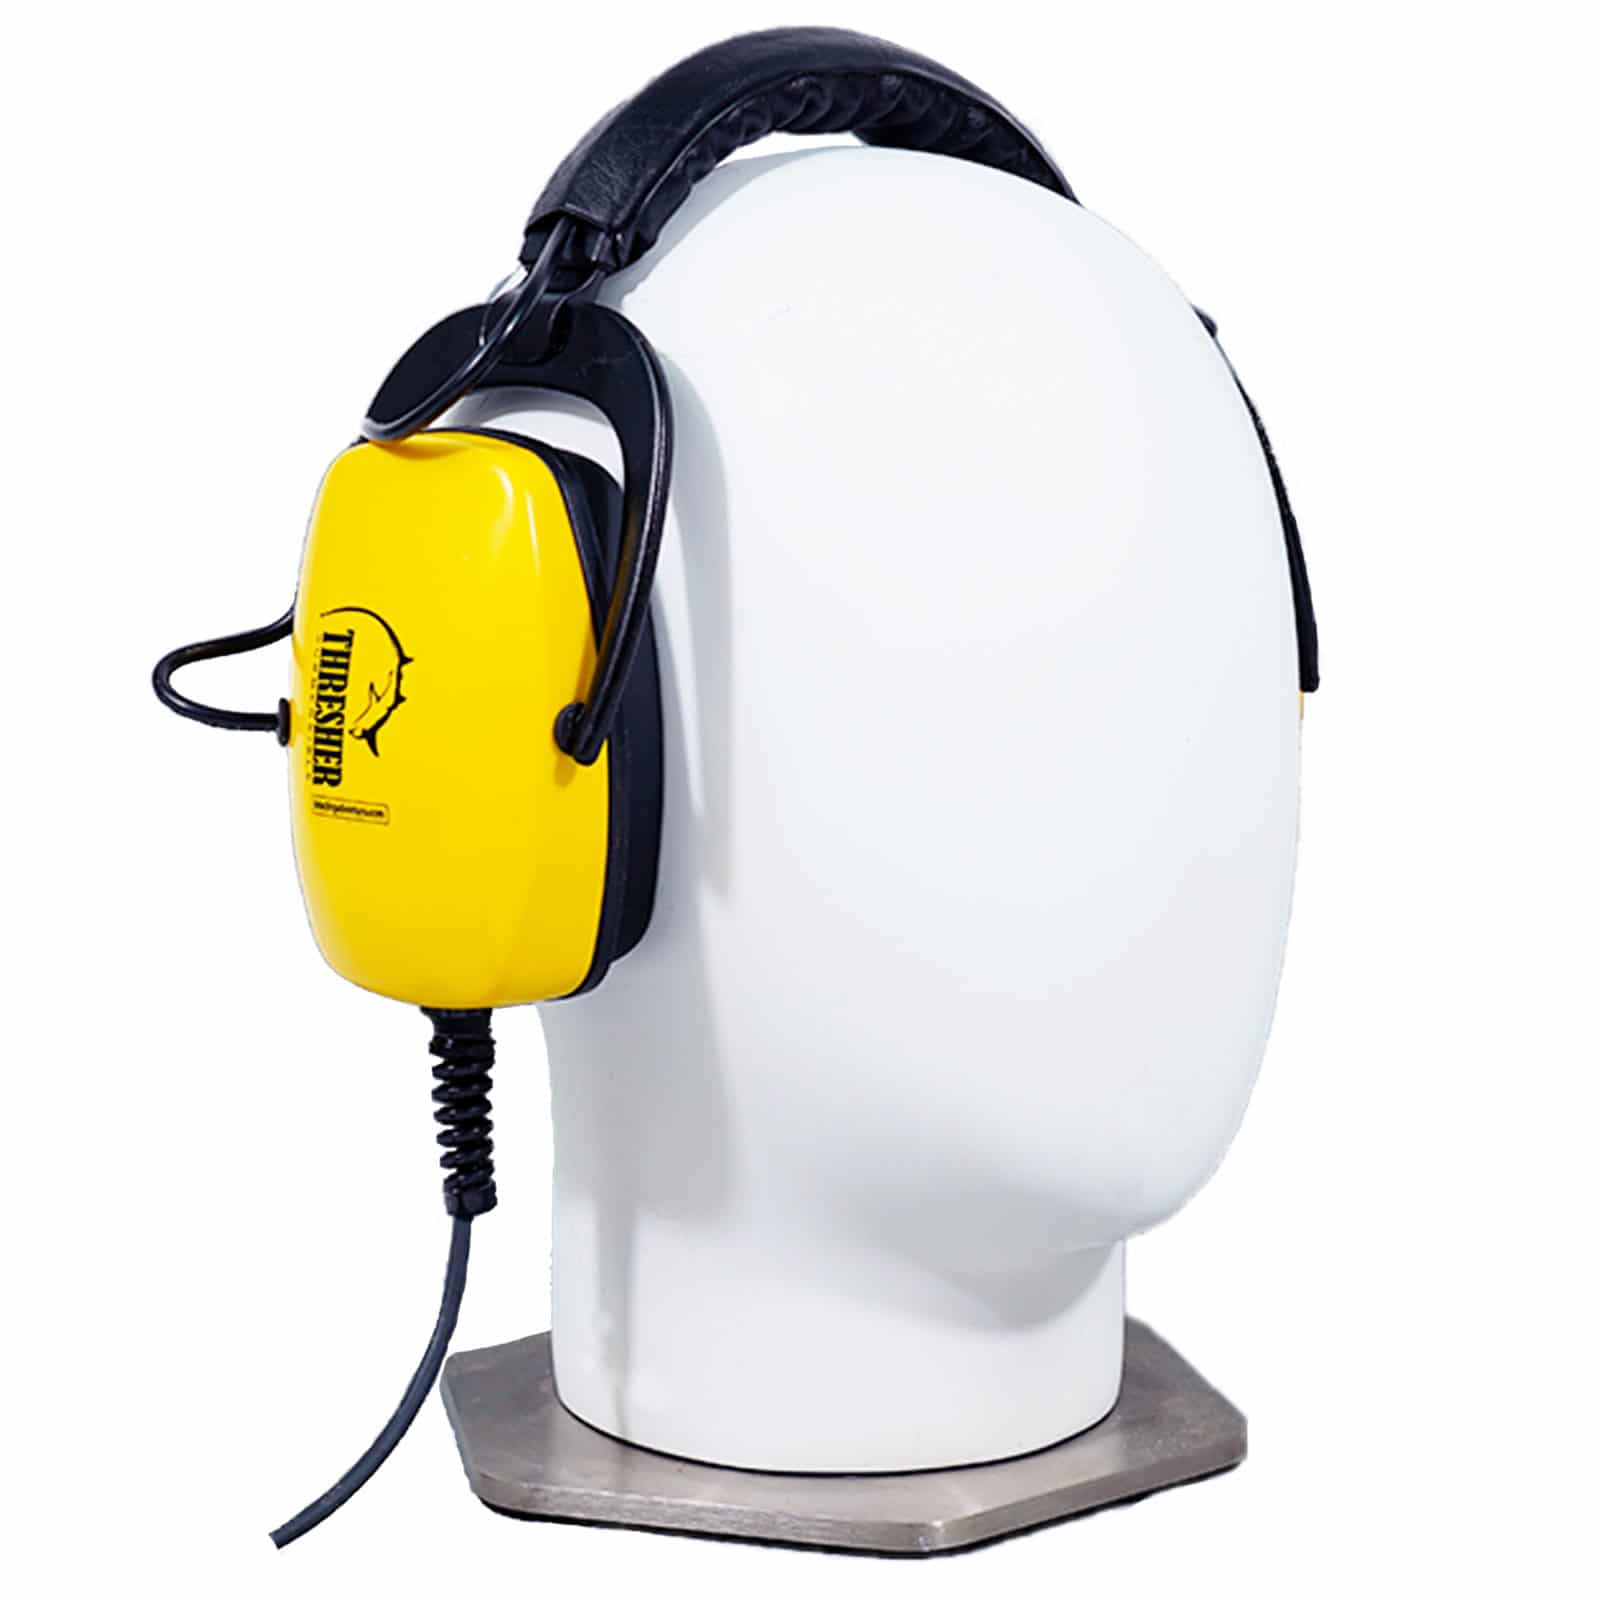 NEW - Detecting Adventure Thresher Submersible Headphones for Minelab CTX 3030